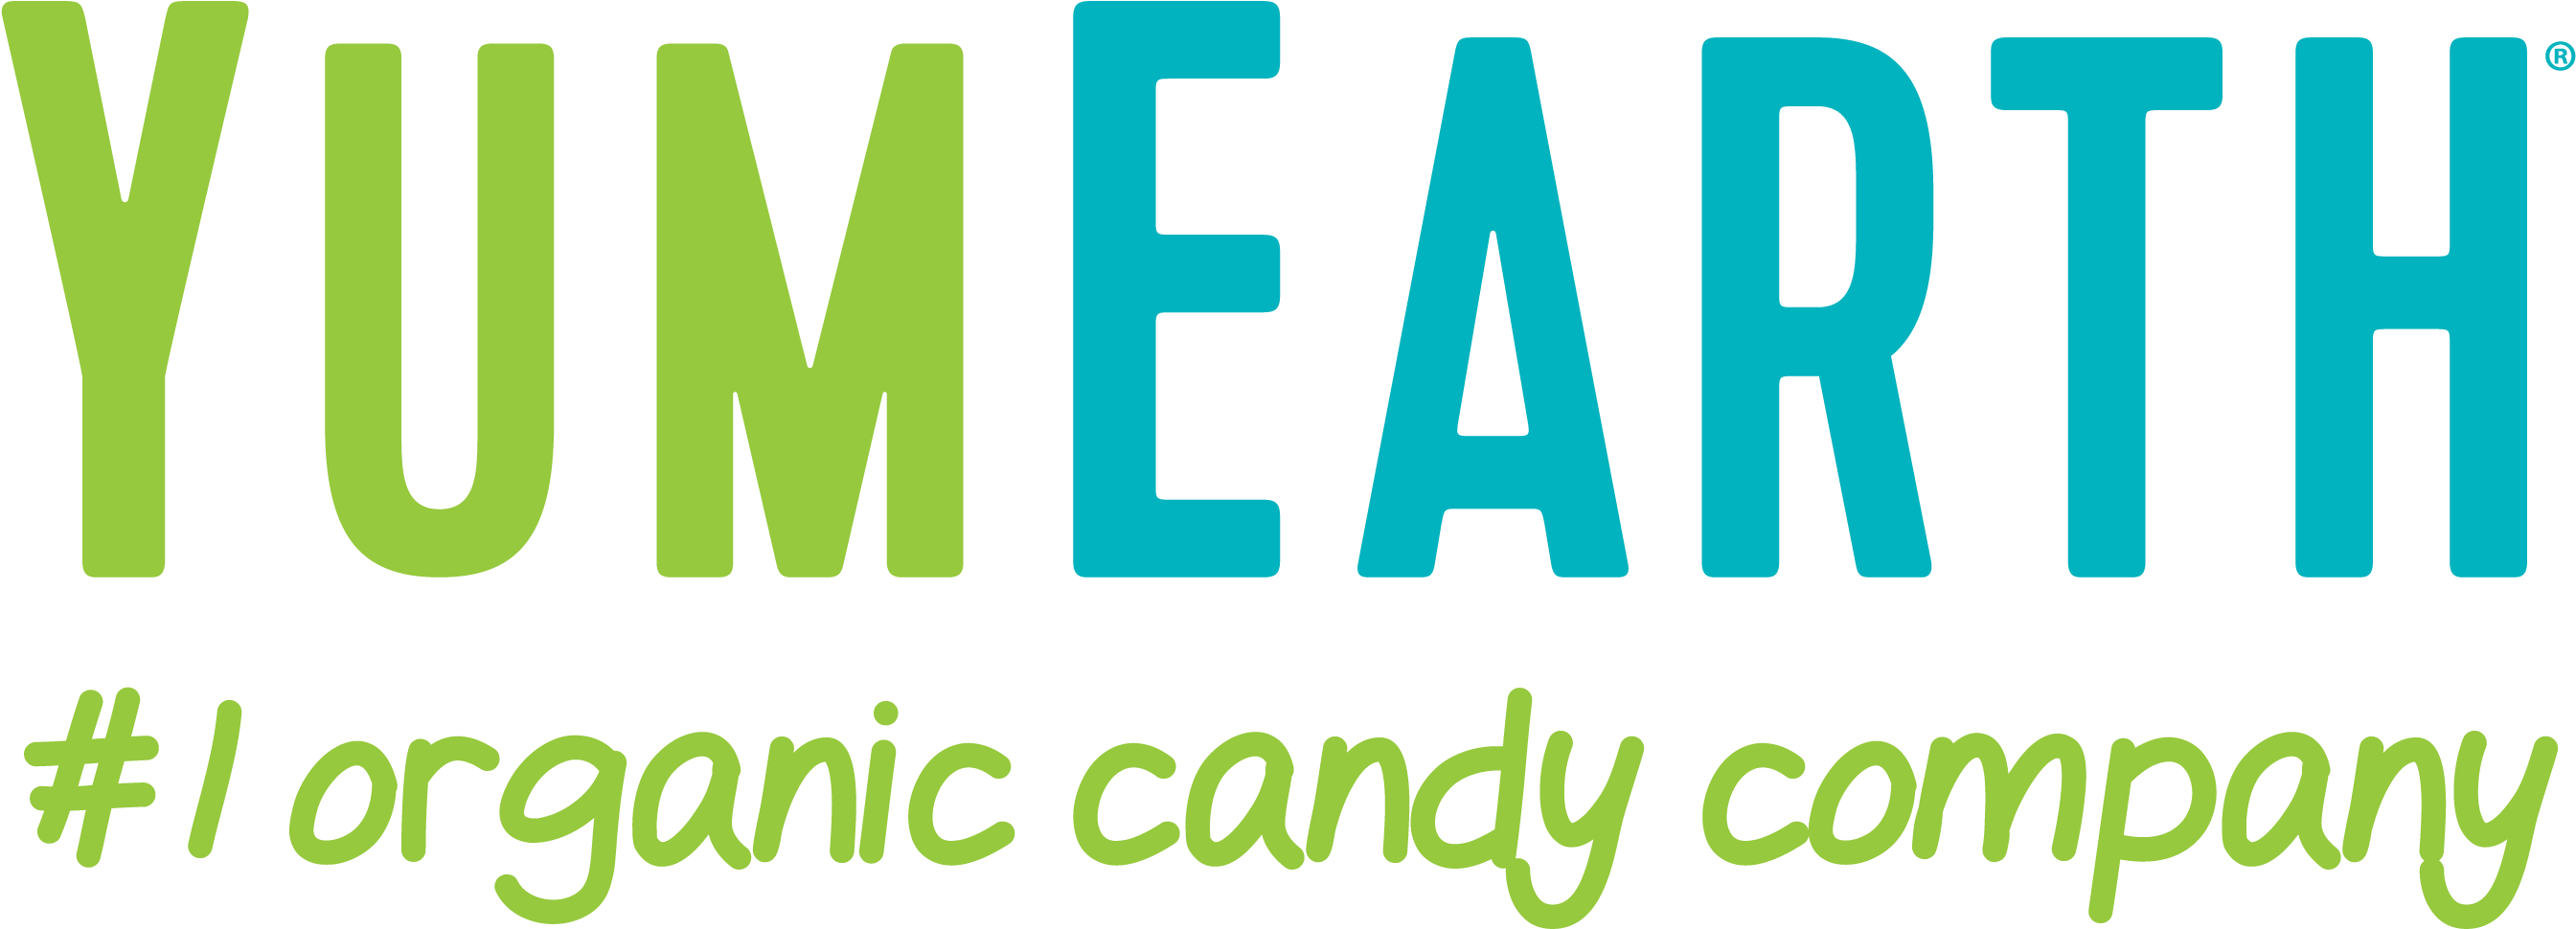 Yummy Earth Inc Logo - Yumearth Organic Sour Twists (2788x1226), Png Download